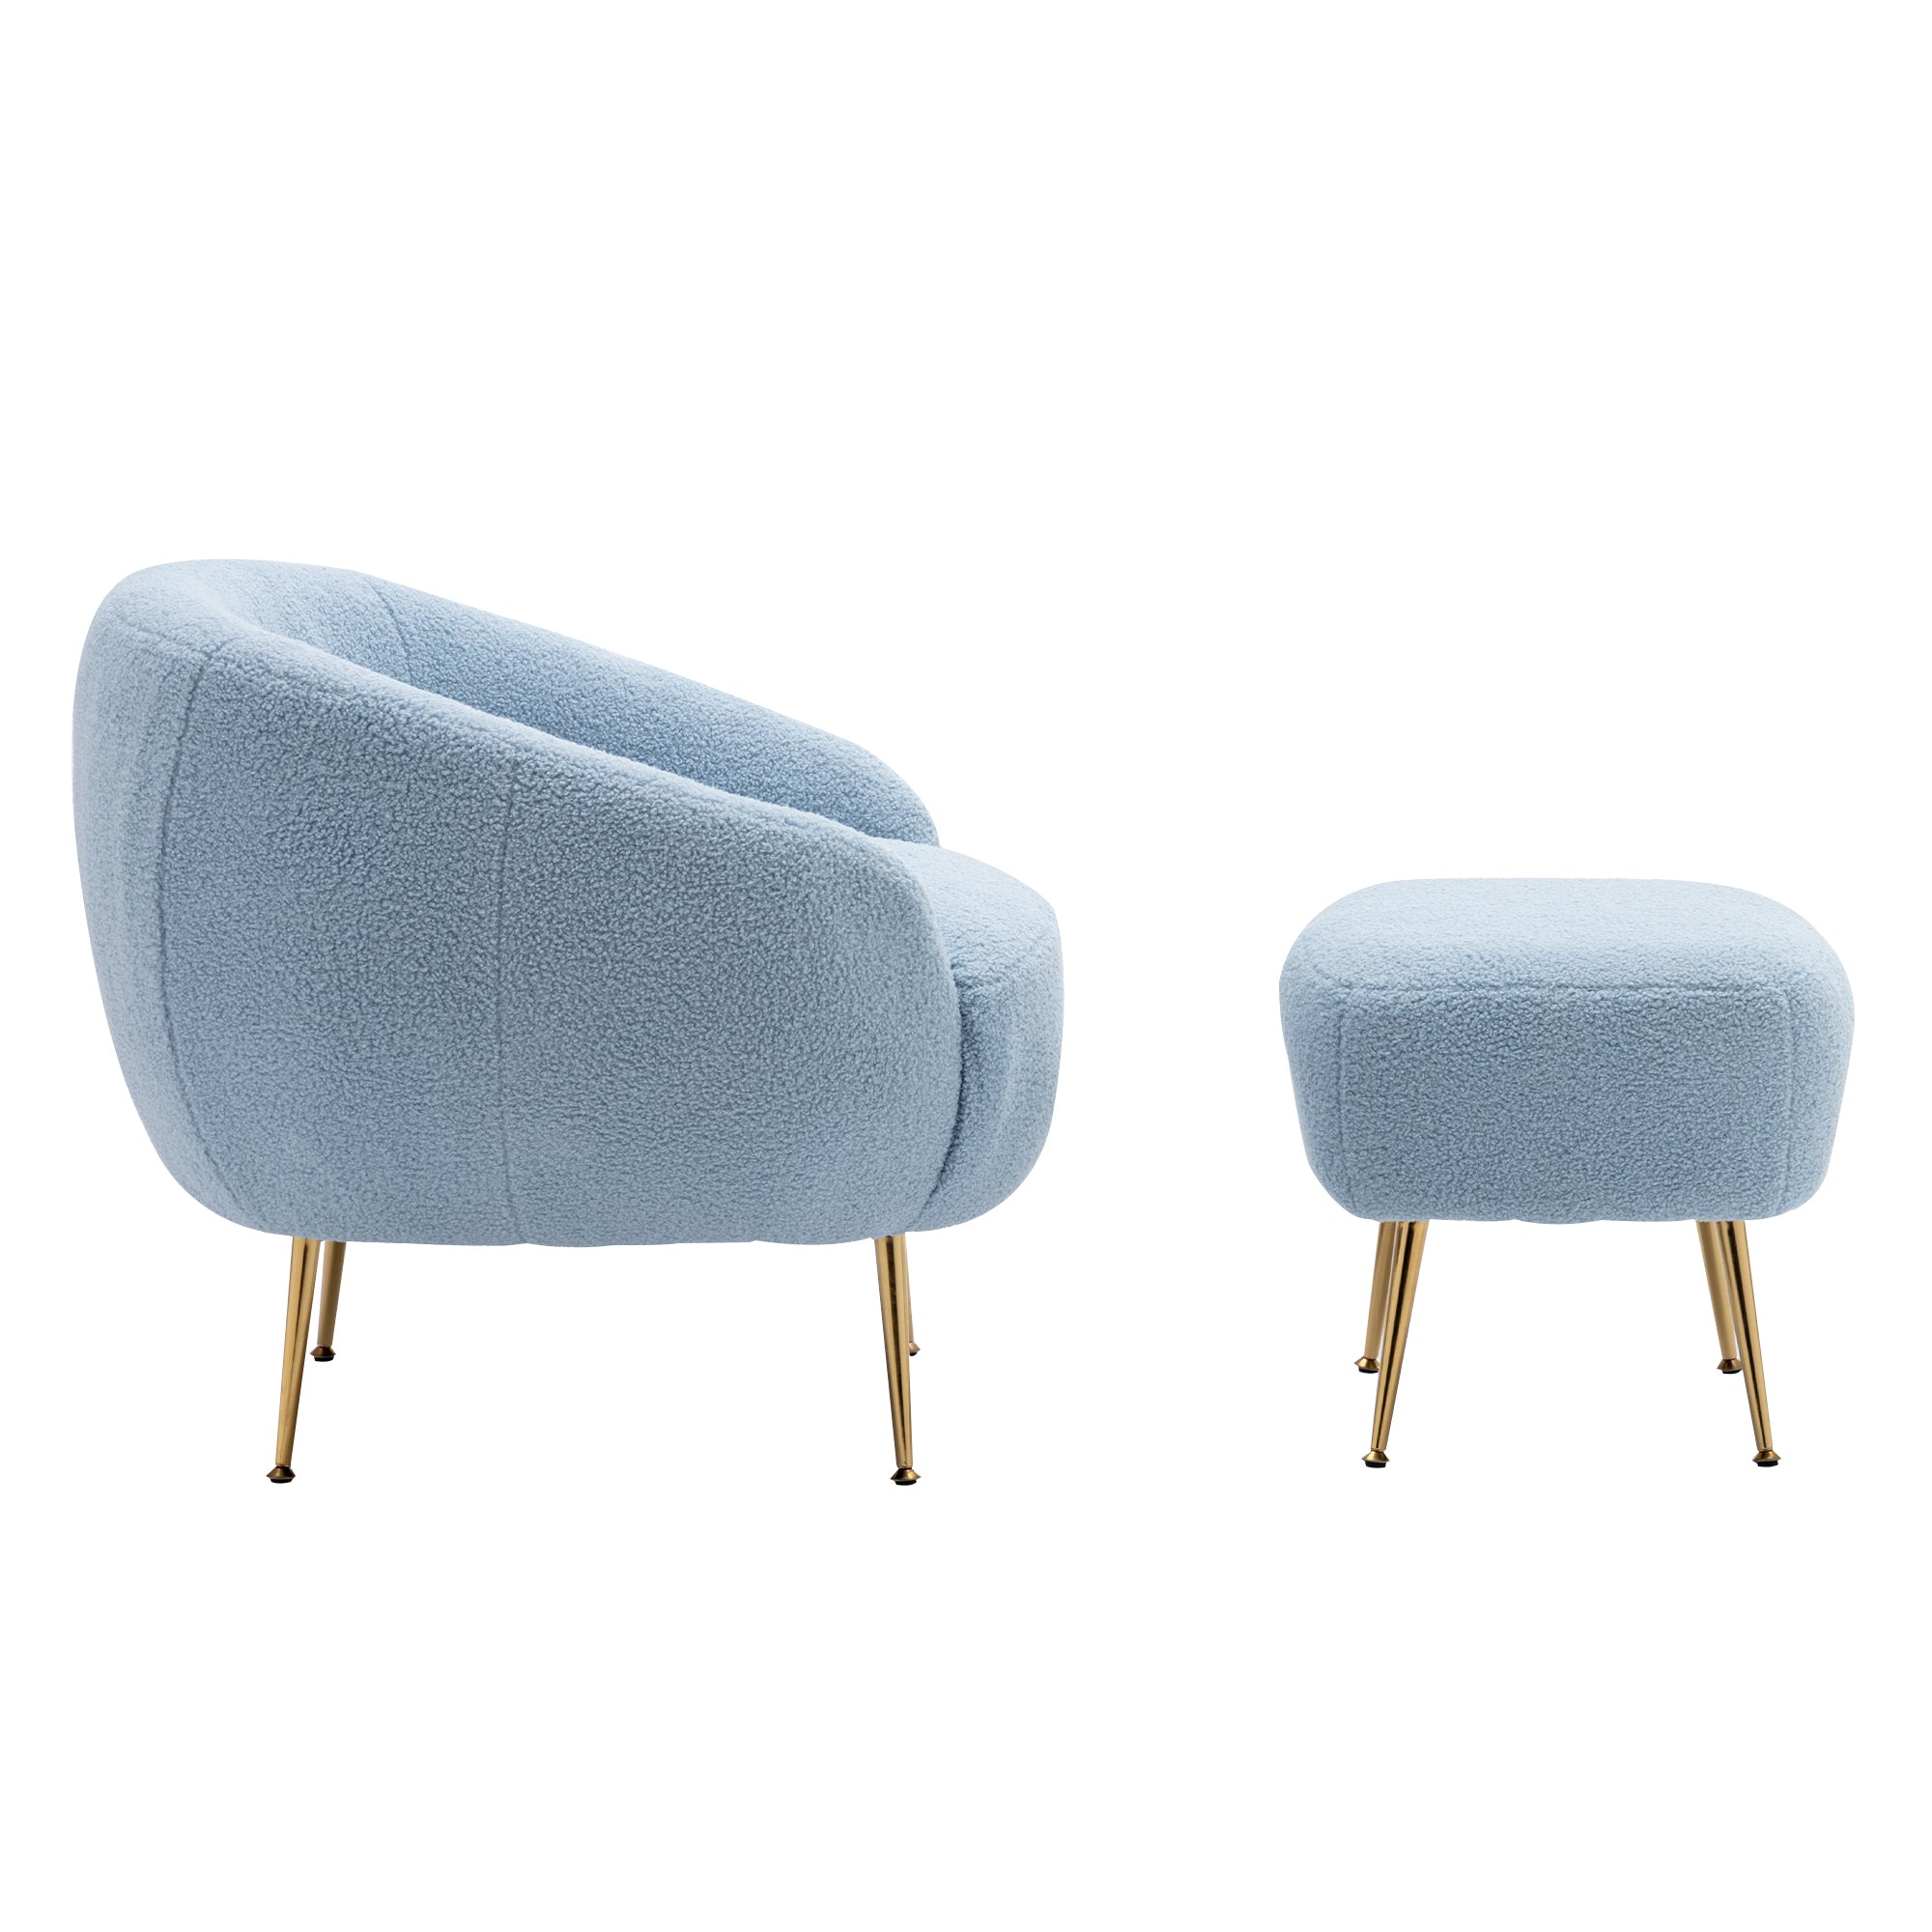 Modern Comfy Leisure Accent Chair, Teddy Short Plush Particle Velvet Armchair with Ottoman - Light Blue